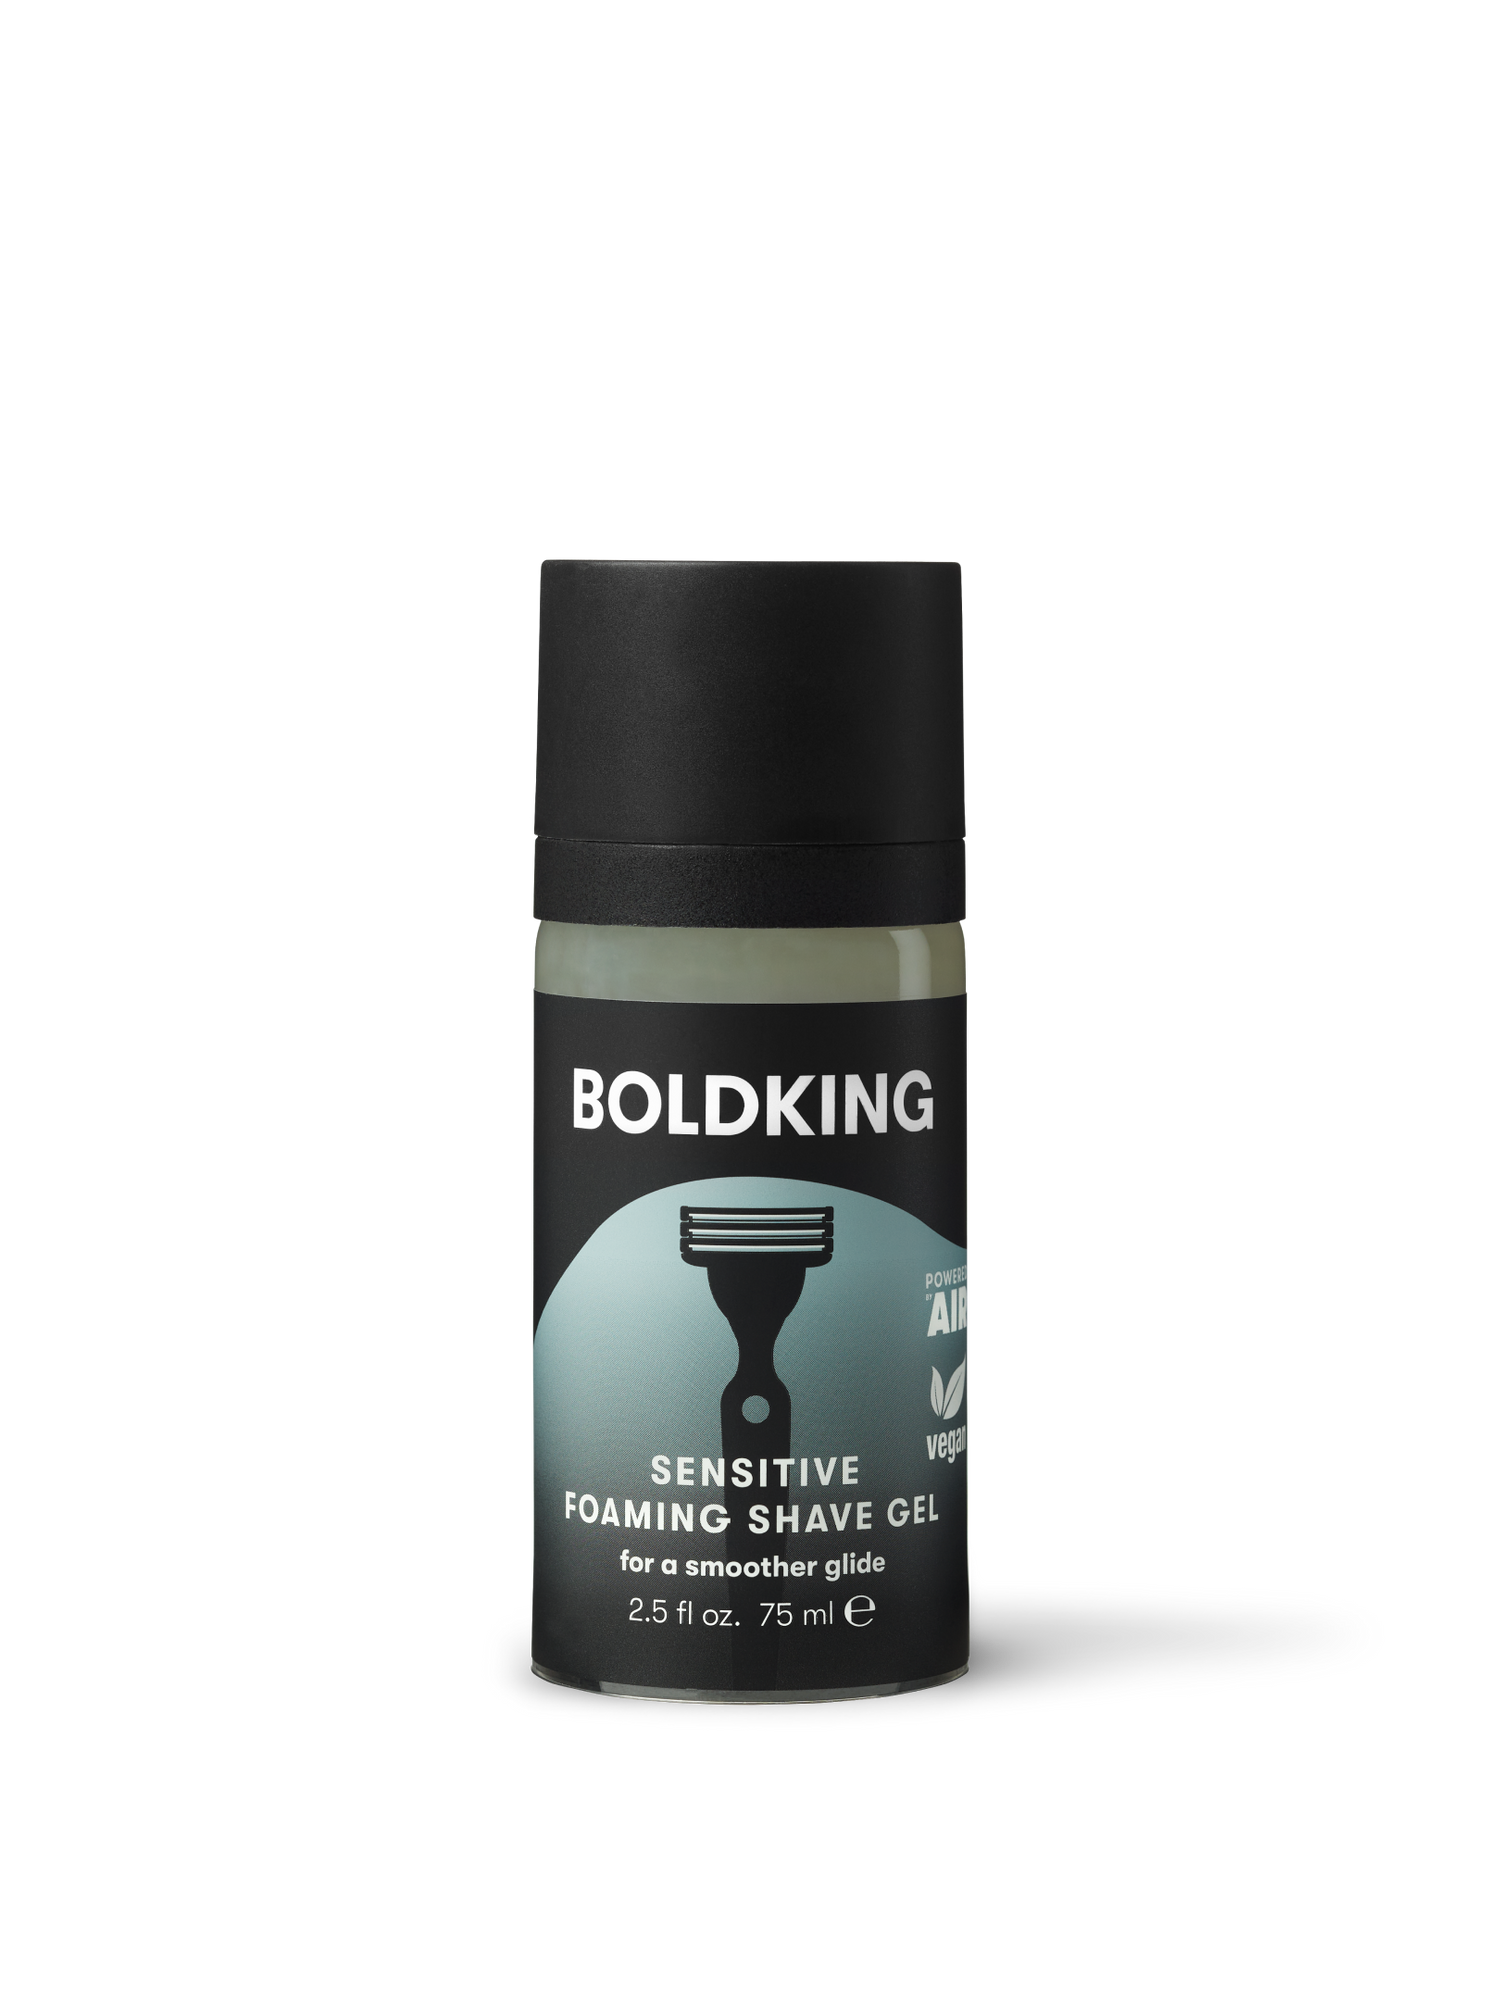 Foaming shave gel Sensitive 75ml